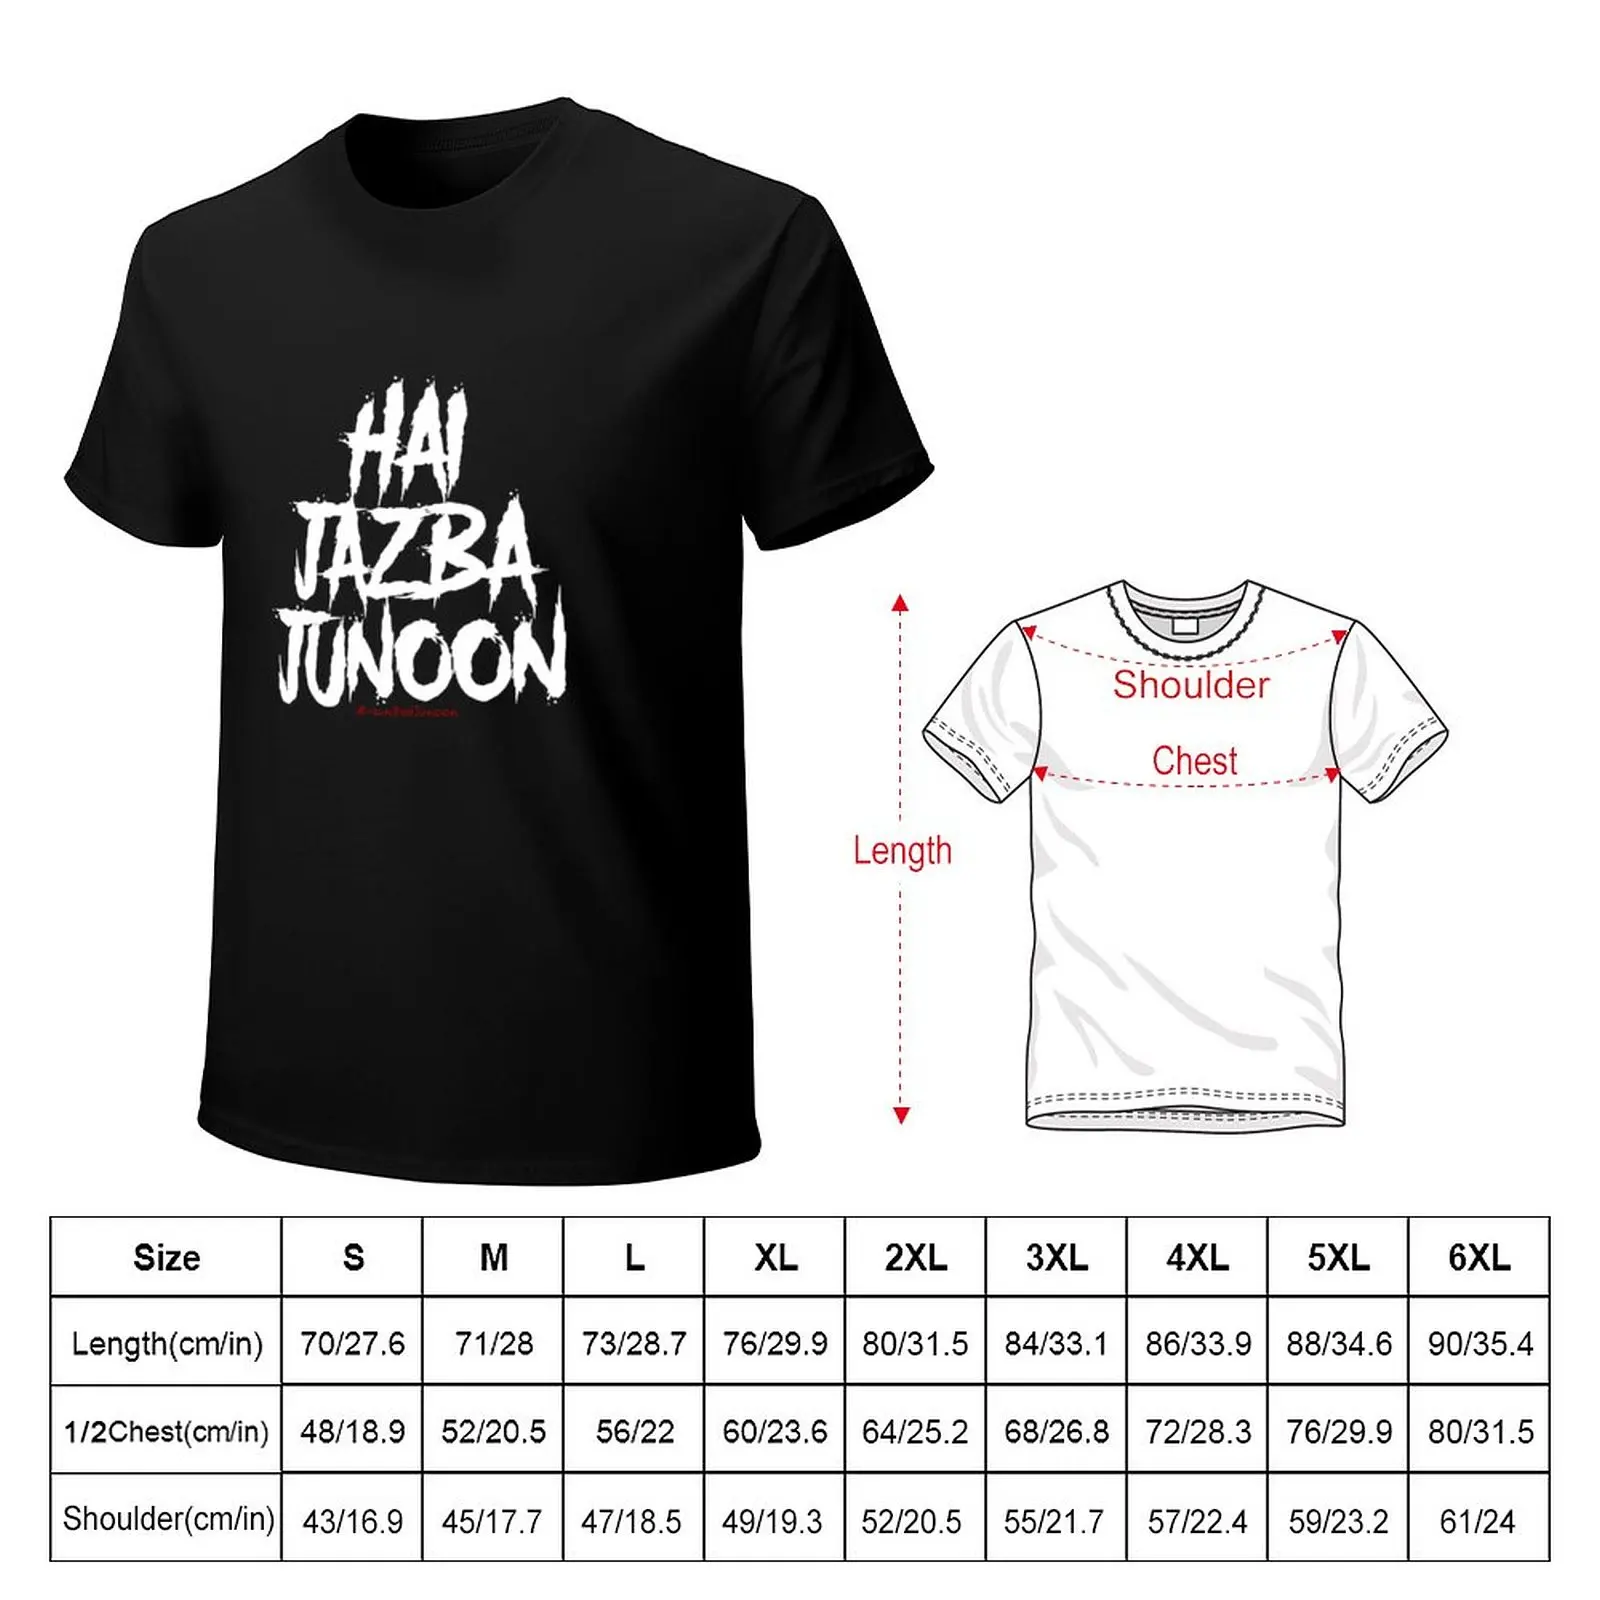 Hai Jazba Junoon Slim Fit TShirtT shirt Hoodie for Men, Women Unisex Full Size. T-Shirt oversized t shirts t shirts for men